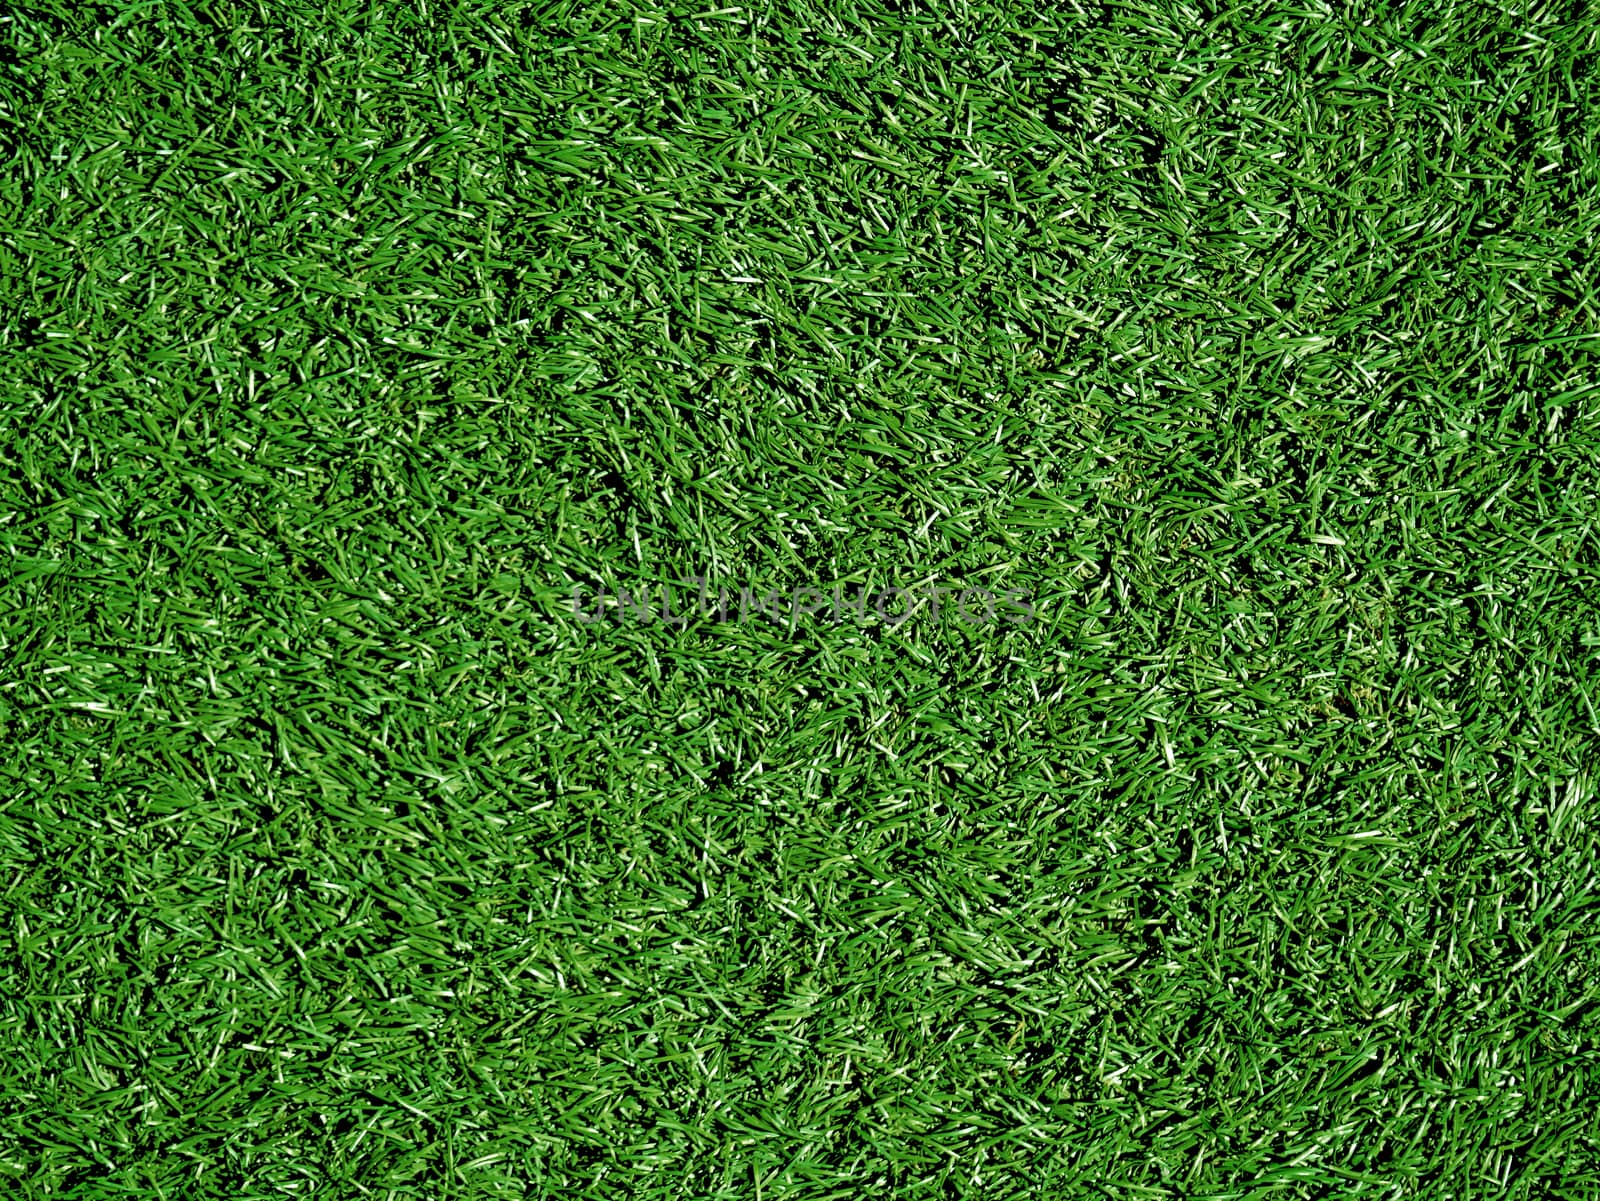 Artificial Grass Field Top View Texture by Noppharat_th